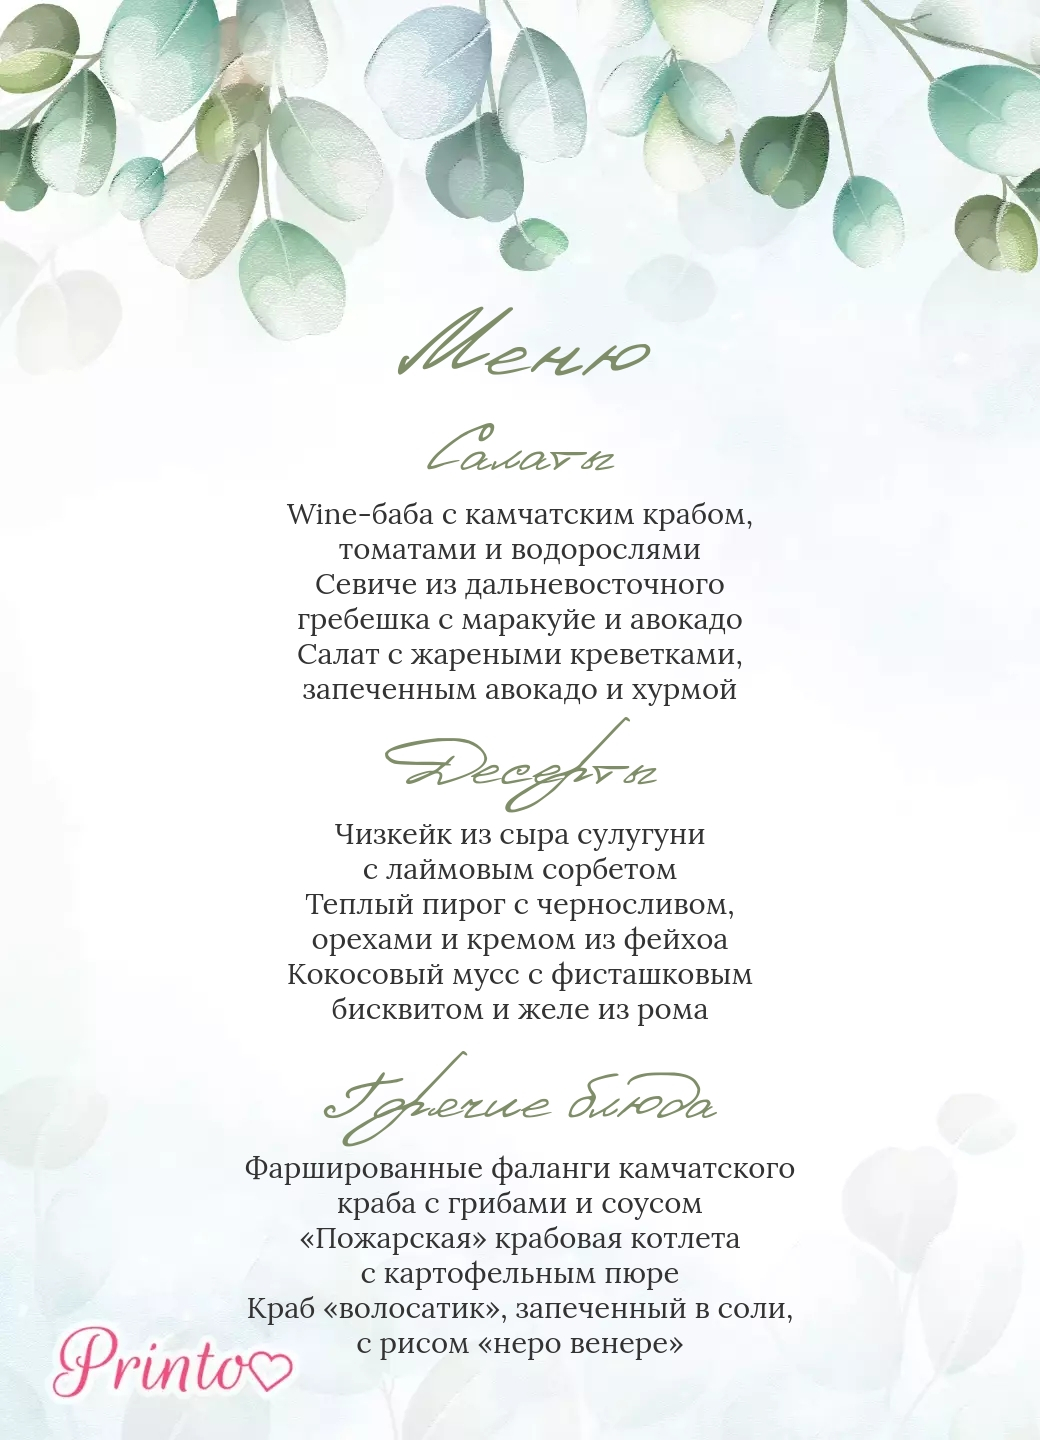 Шаблон свадебного меню "Тихое торжество"